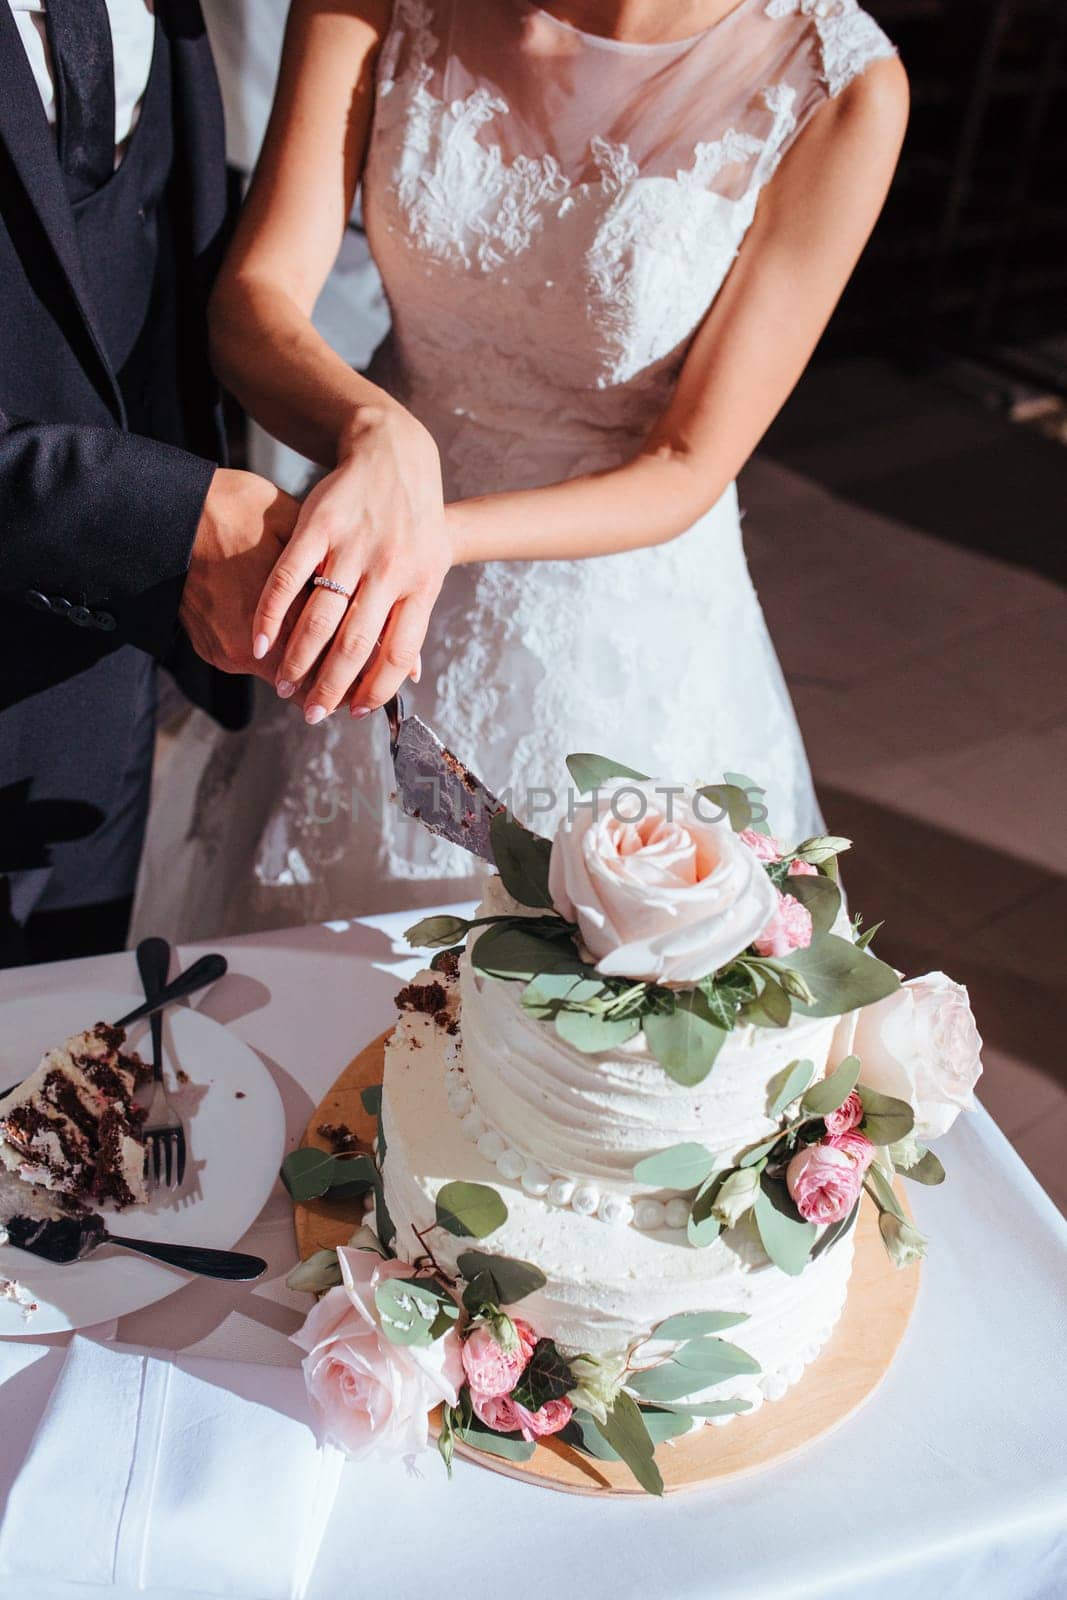 wedding. The bride and groom holding hands cut the wedding cake Yaremche, Bukovel, Ukraine - January 10, 2022 by malyshph